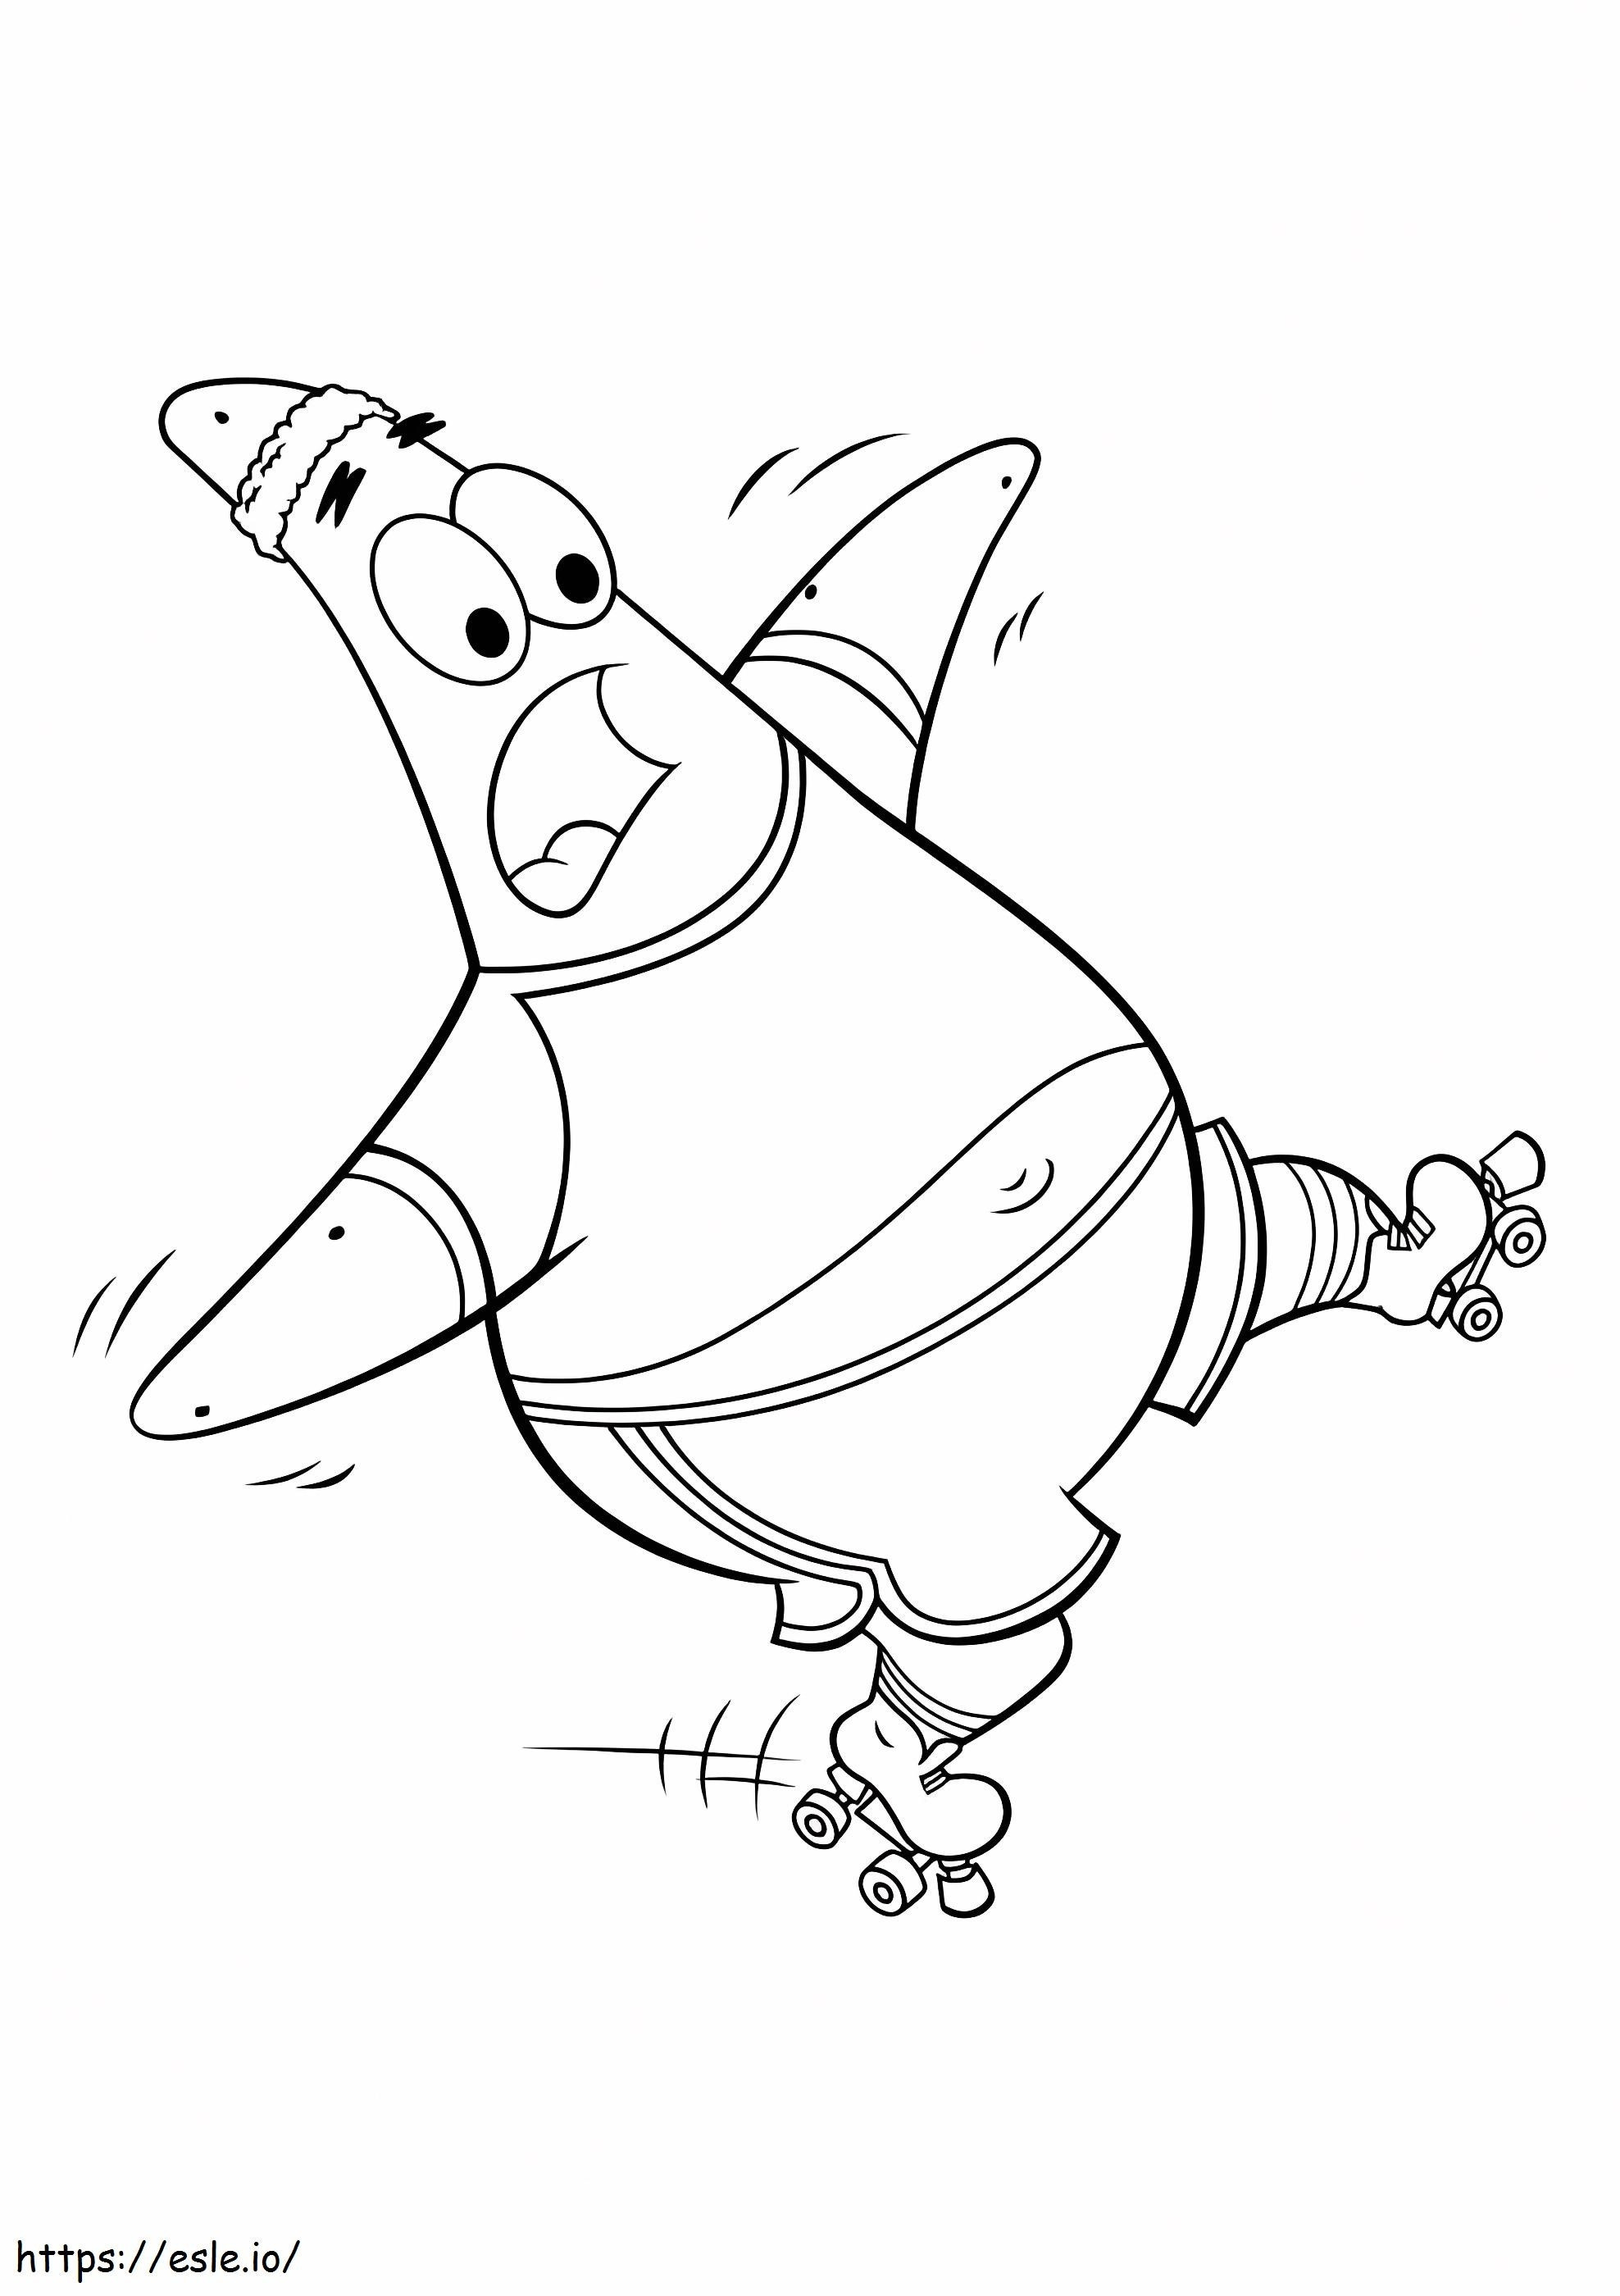 Patrick Star em patins para colorir